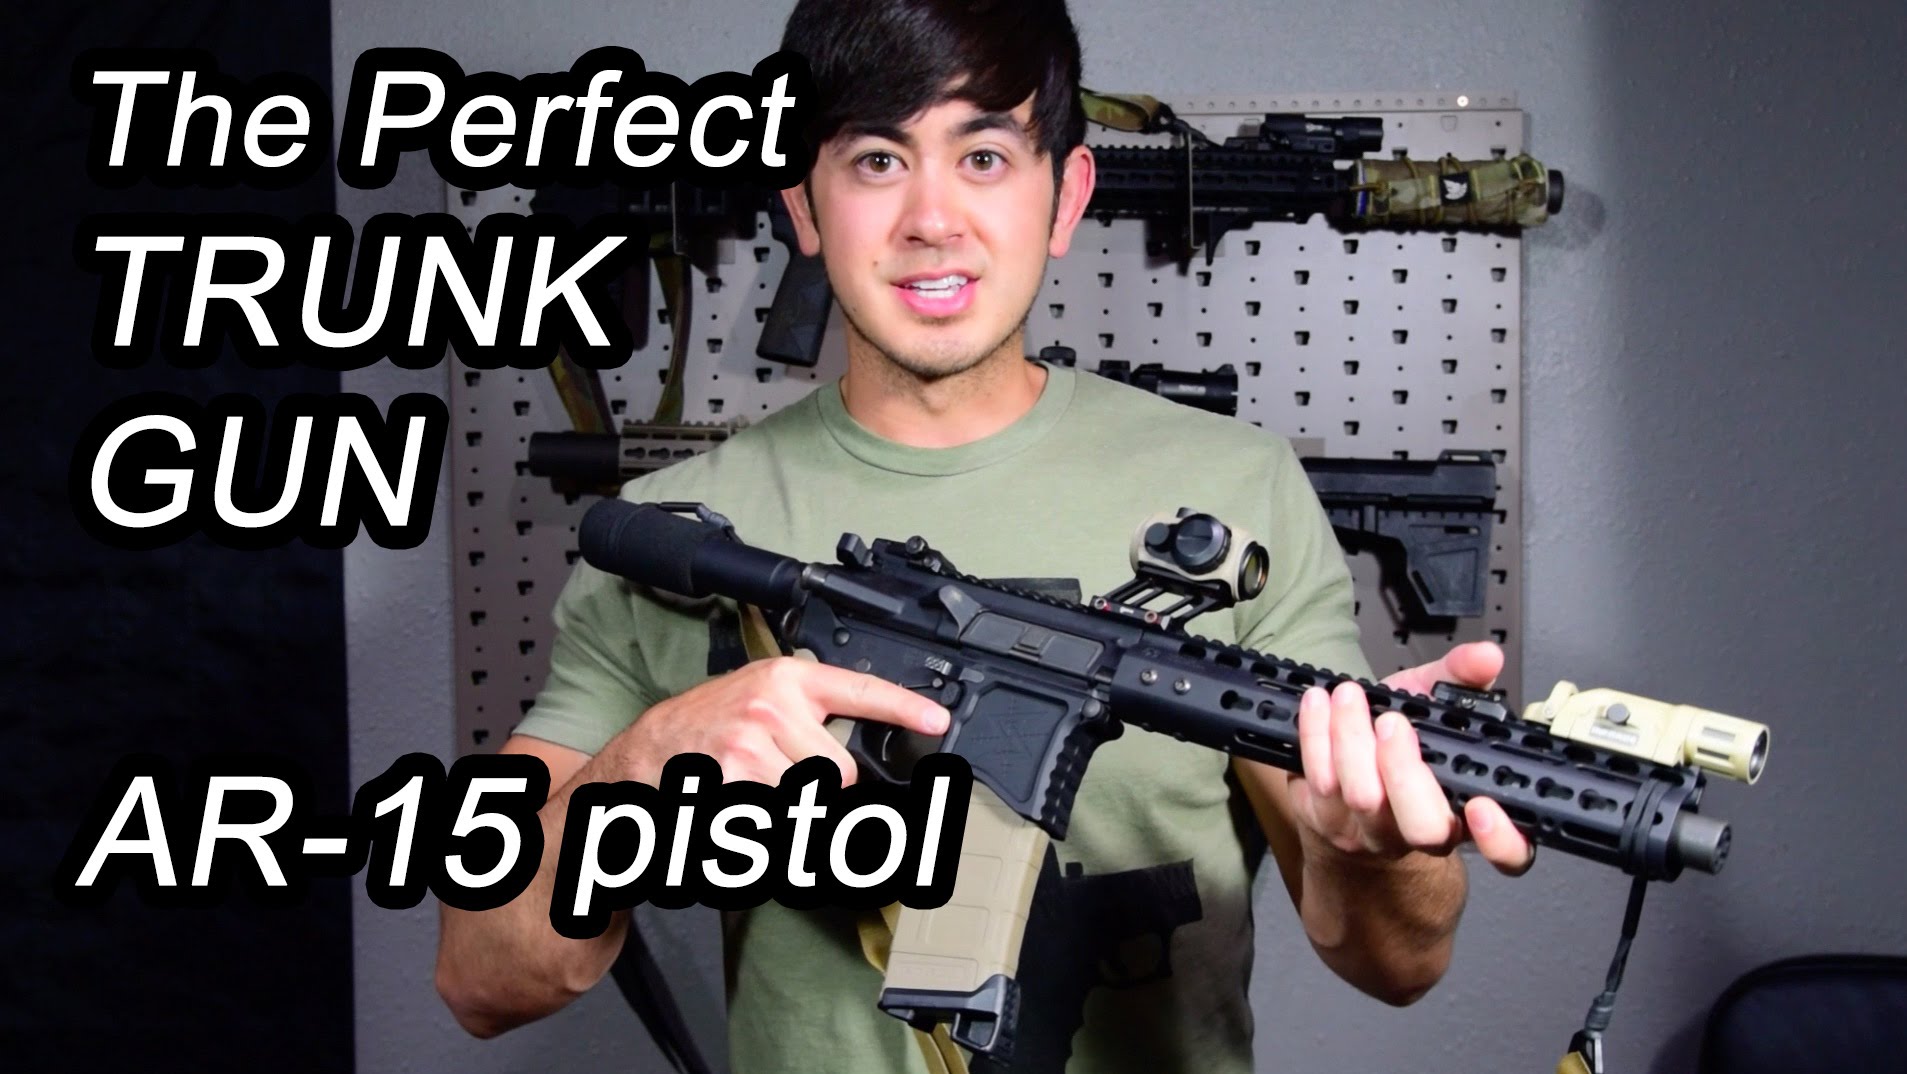 Trunk Gun - AR15 Pistol - The Ultimate Car Gun - Emergency Situation Gun